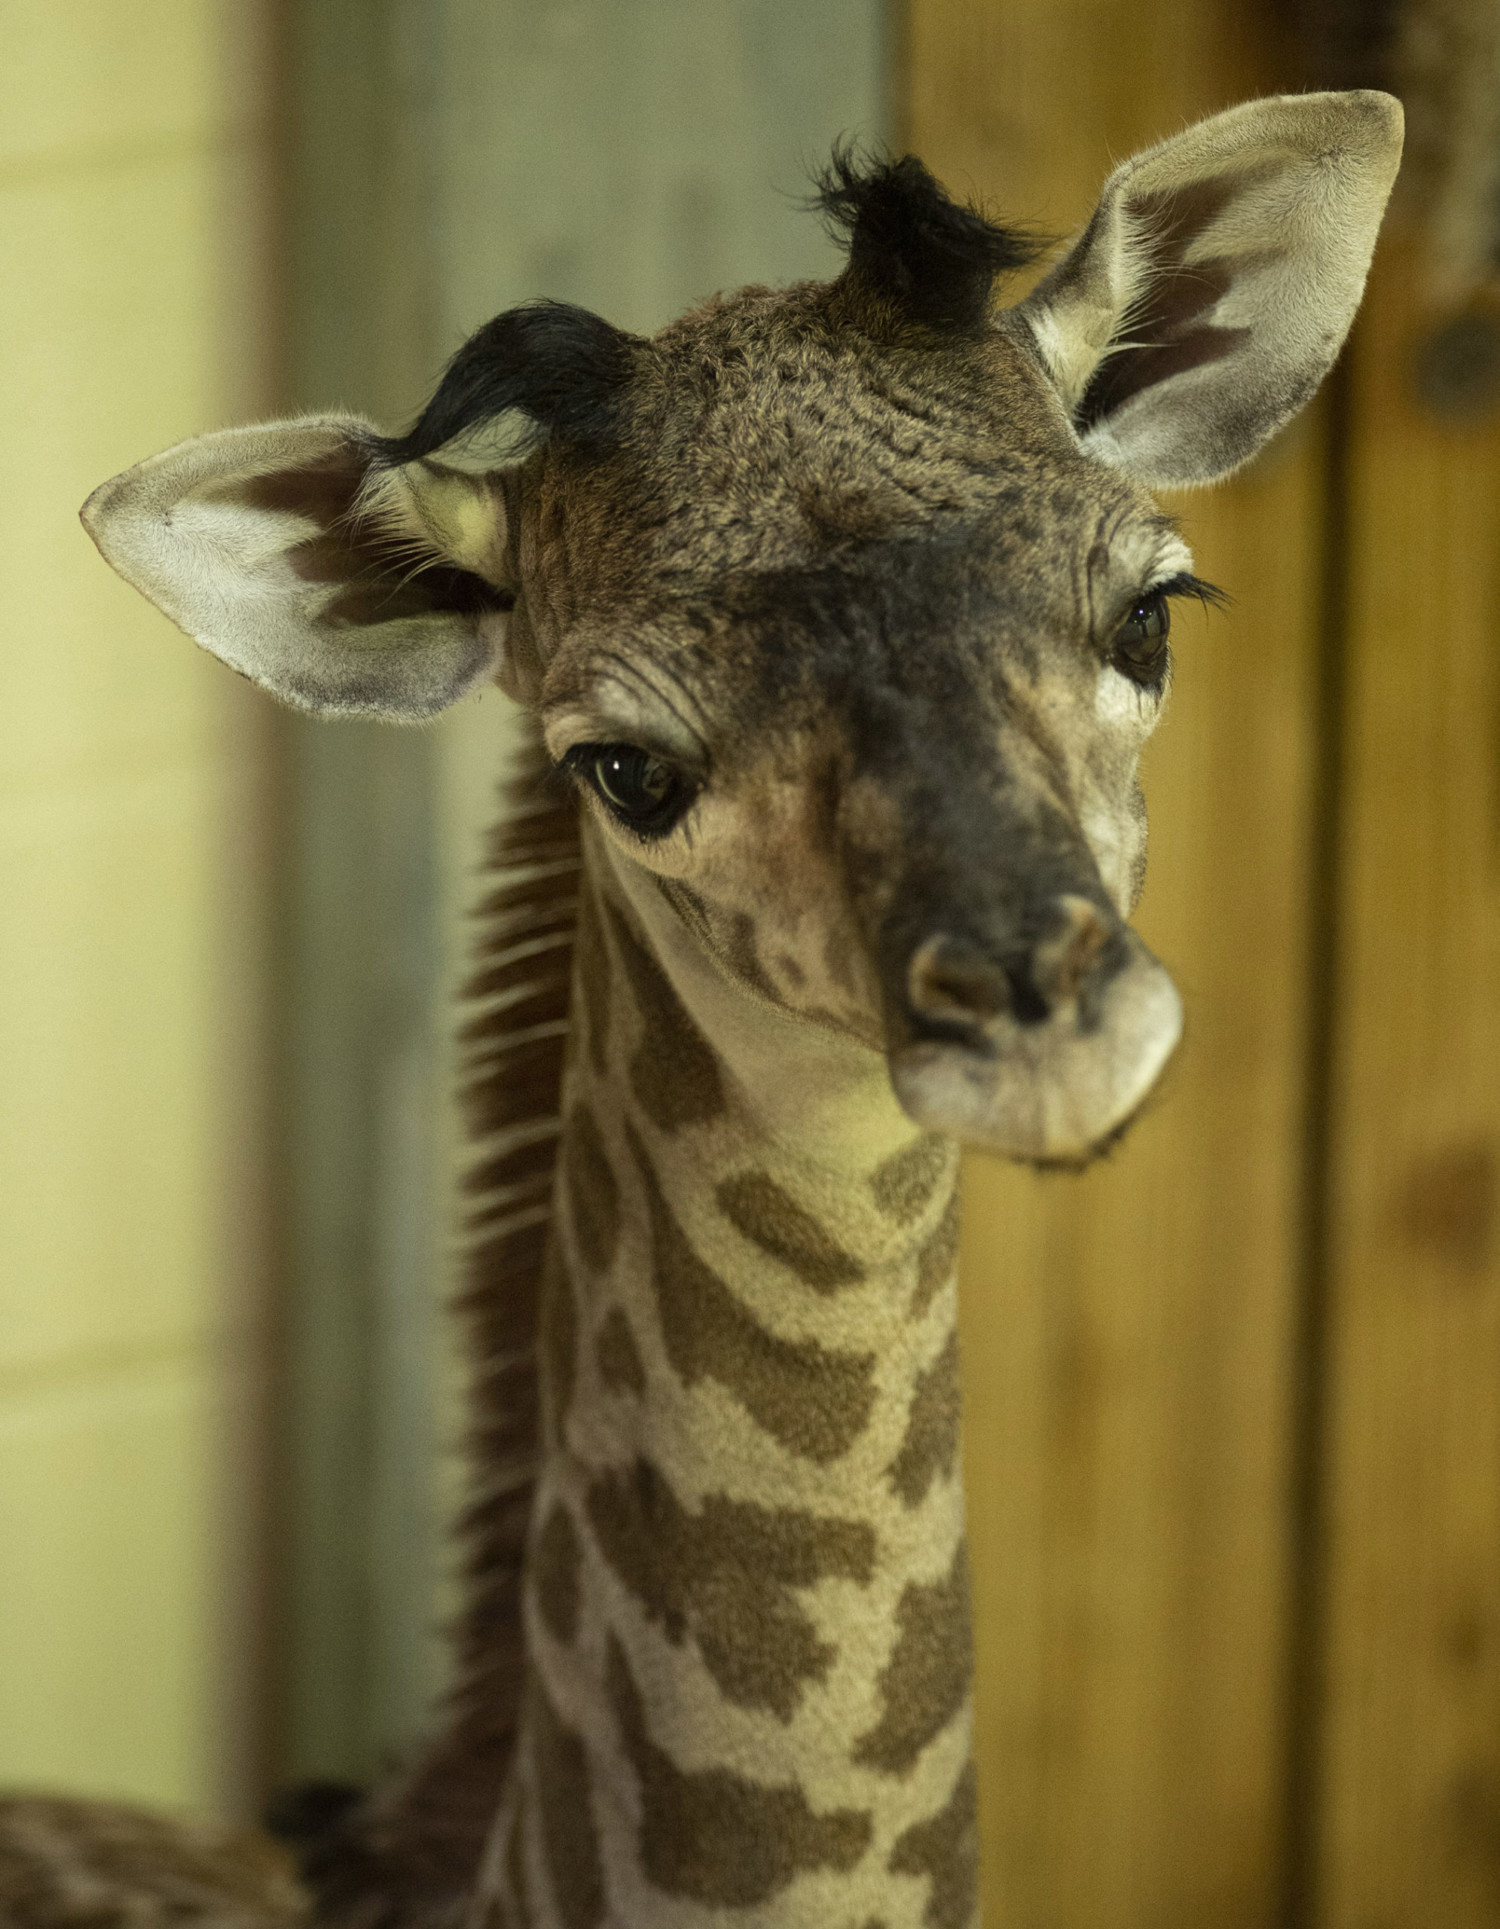 A Baby Giraffe Was Born At Disney’s Animal Kingdom